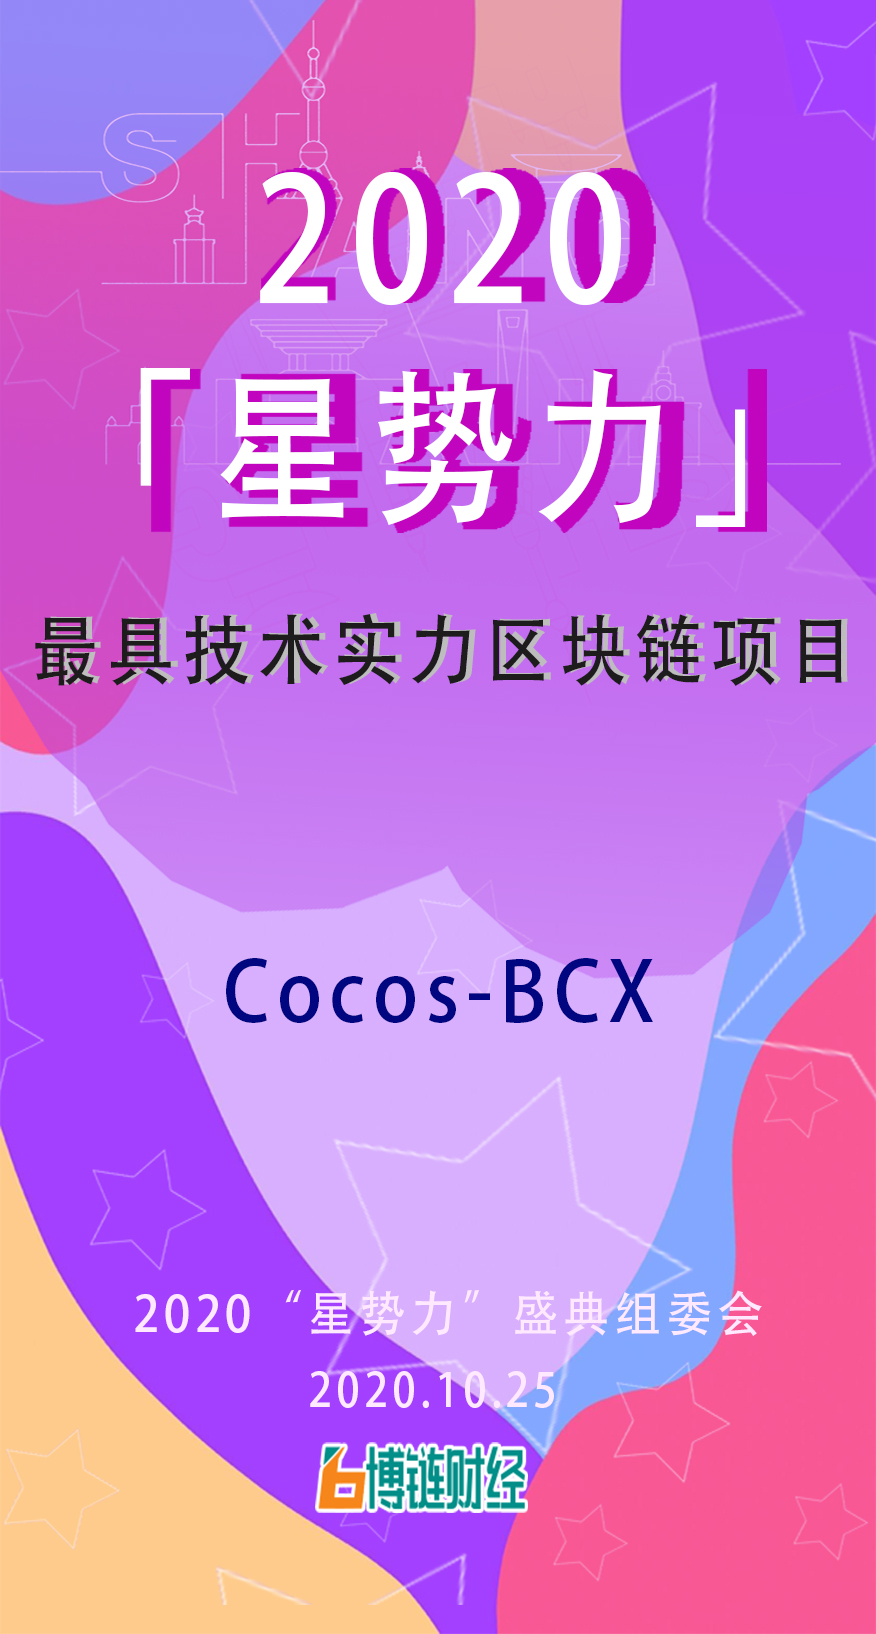 Cocos-BCX.jpg